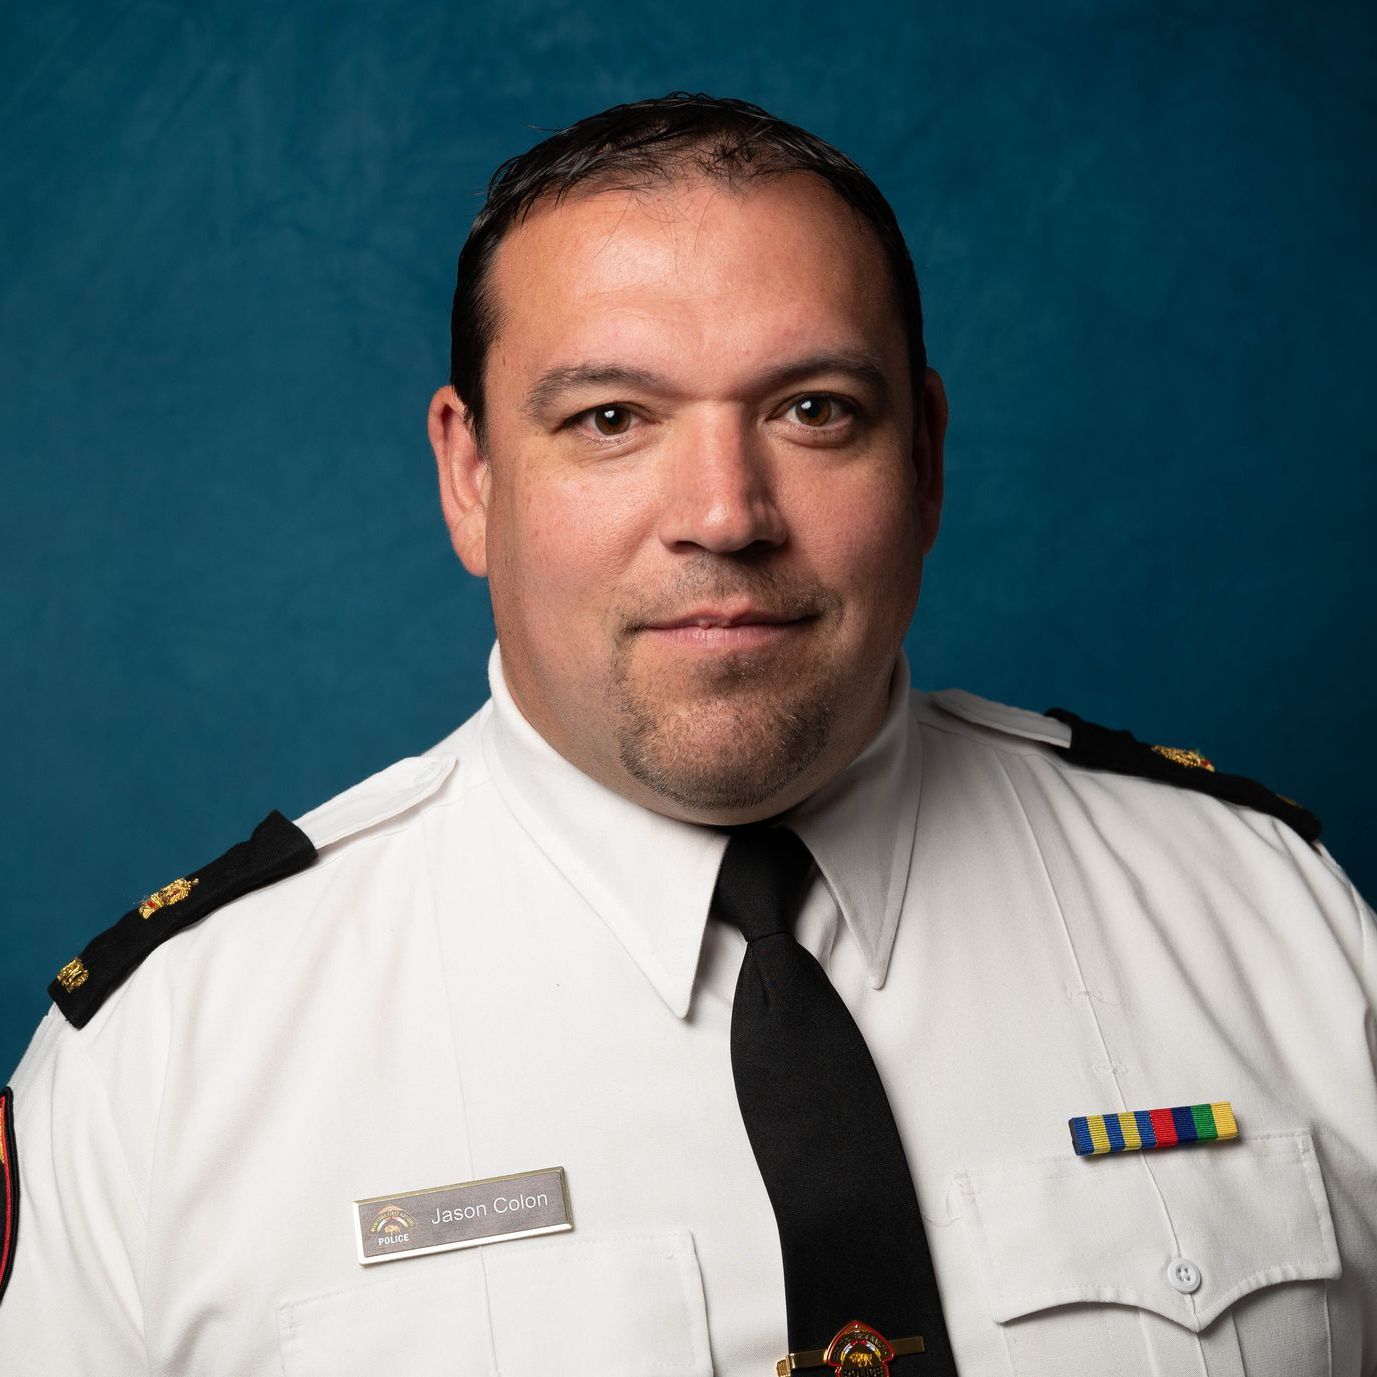 MFNPS-Manitoba First Nations Police Service - Jason Colon